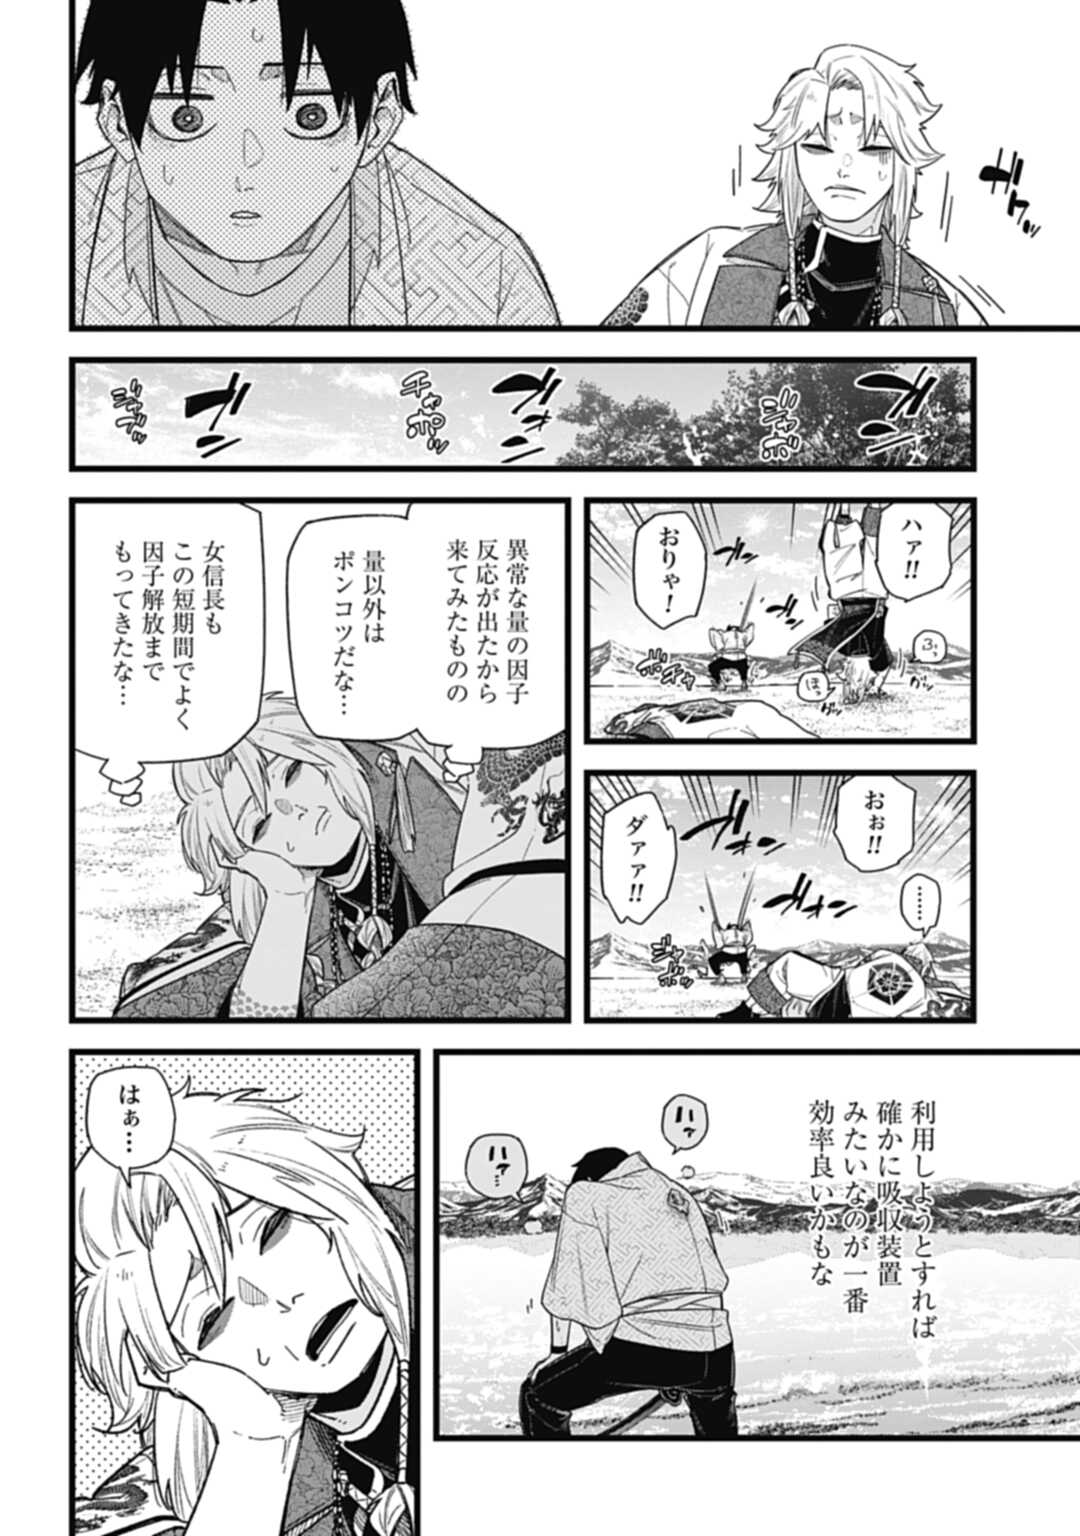 Nobunaga Multiverse - Chapter 10.2 - Page 8